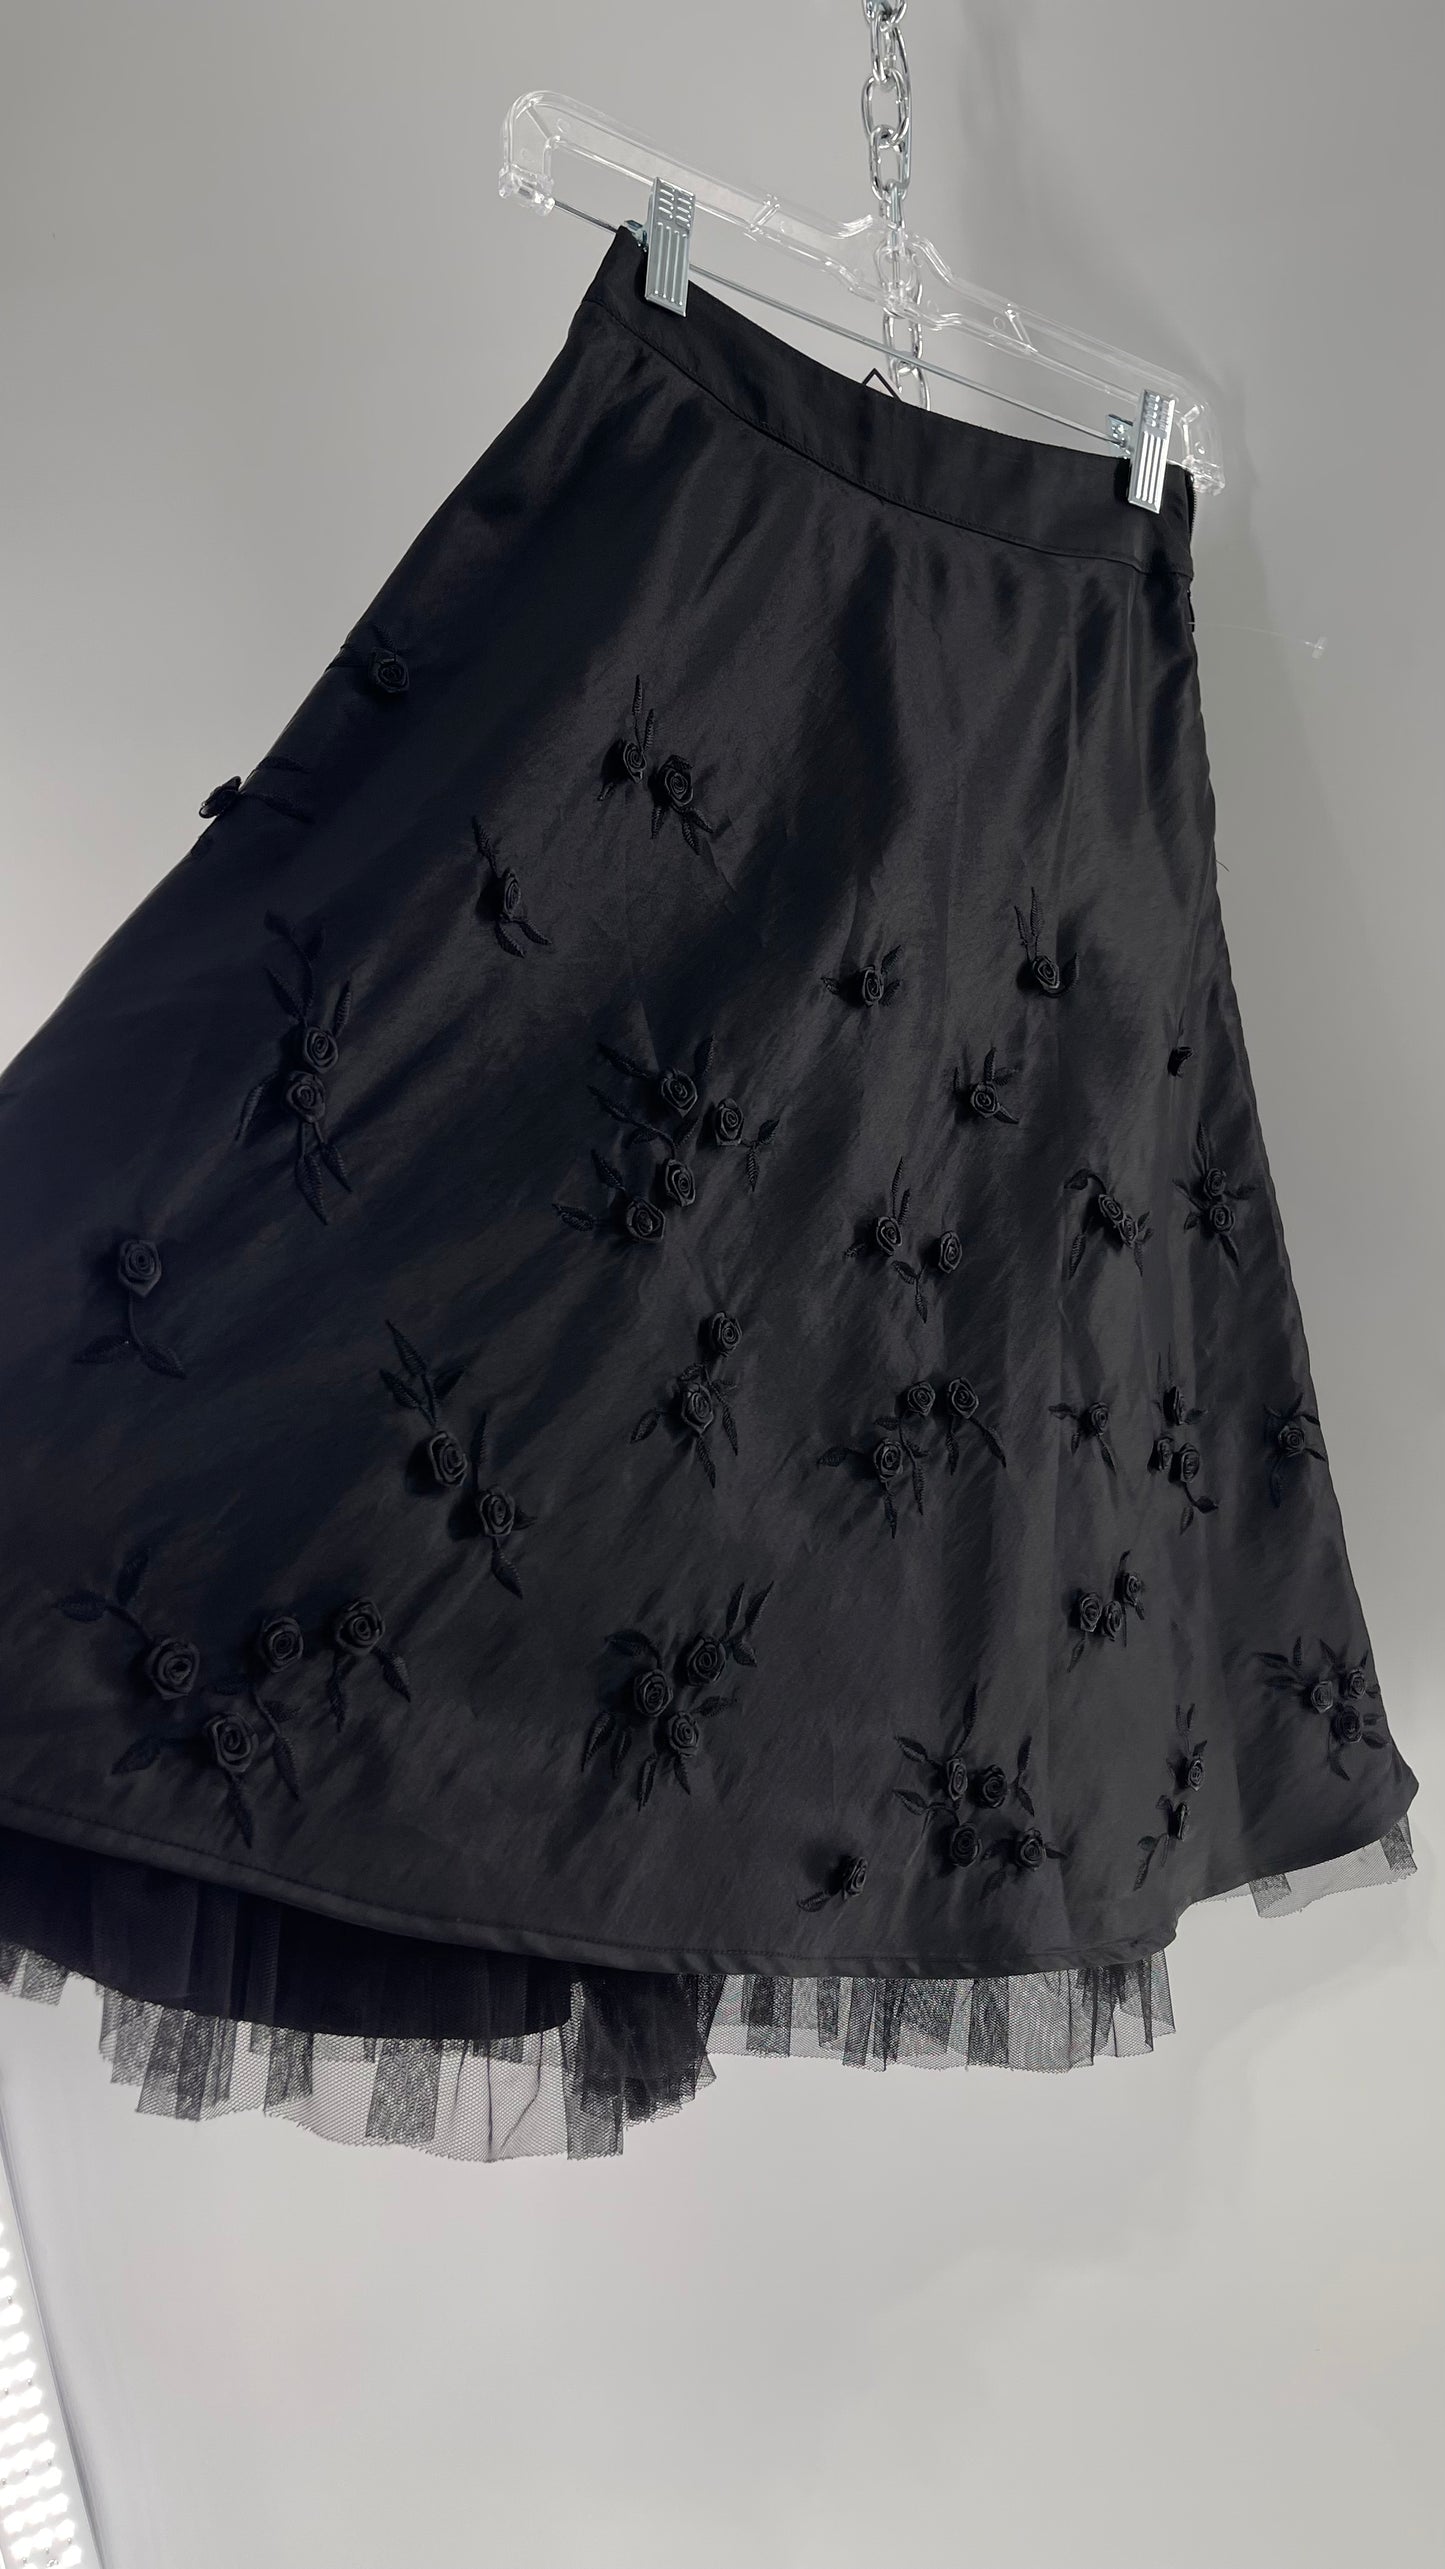 Vintage Josephine Chaus Petite Black Skirt with Rosettes and Mesh Underlay (6P)